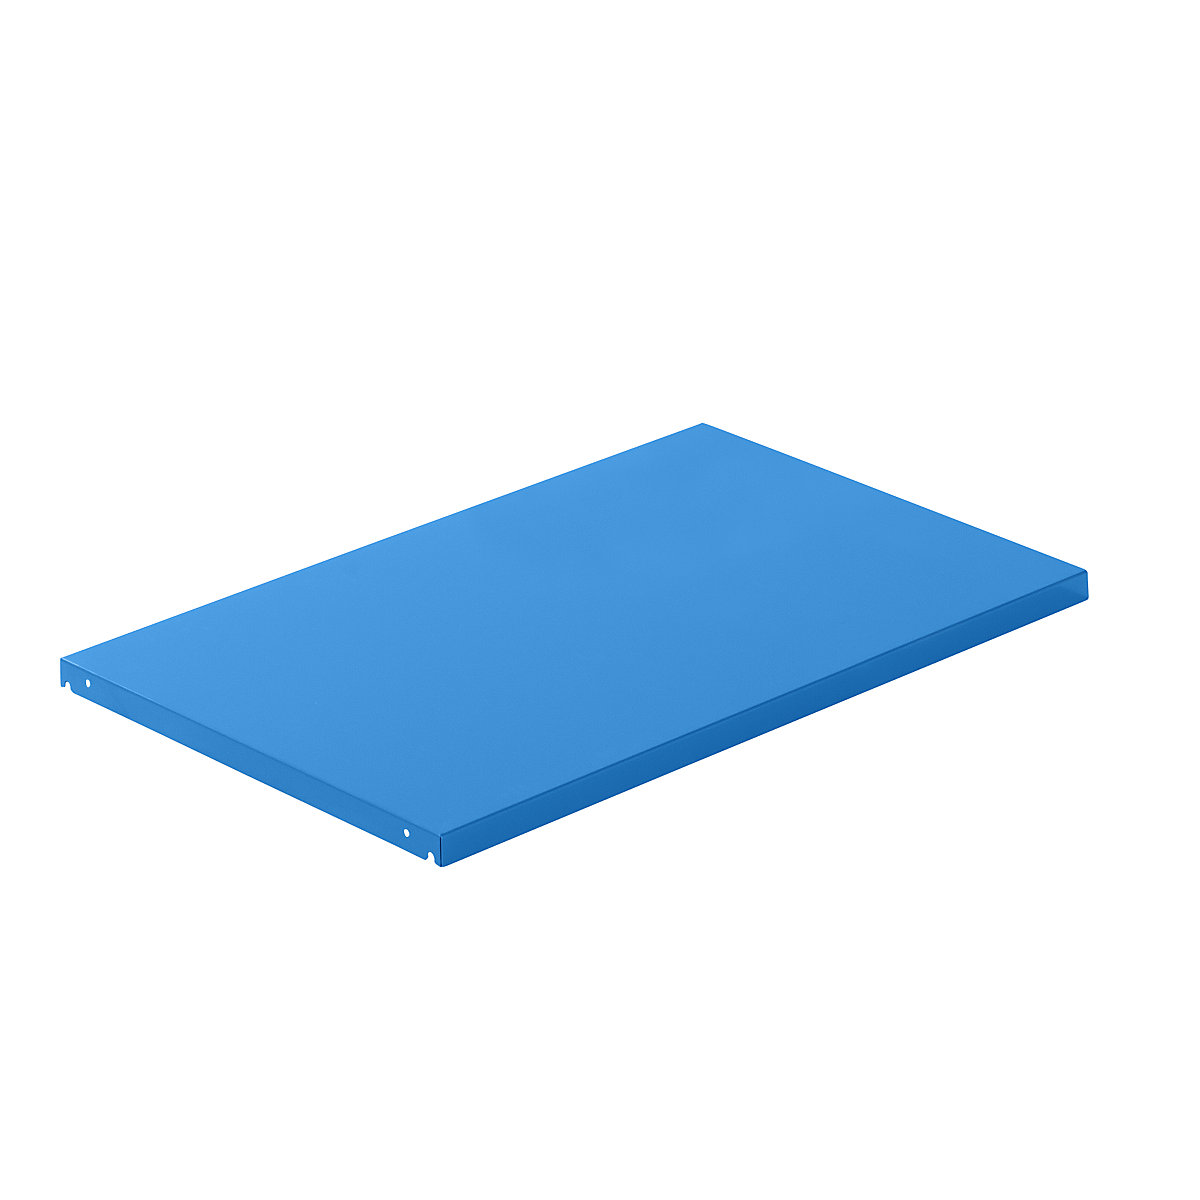 Sheet steel top shelf – LISTA, WxD 1290 x 860 mm, max. shelf load 200 kg, light blue